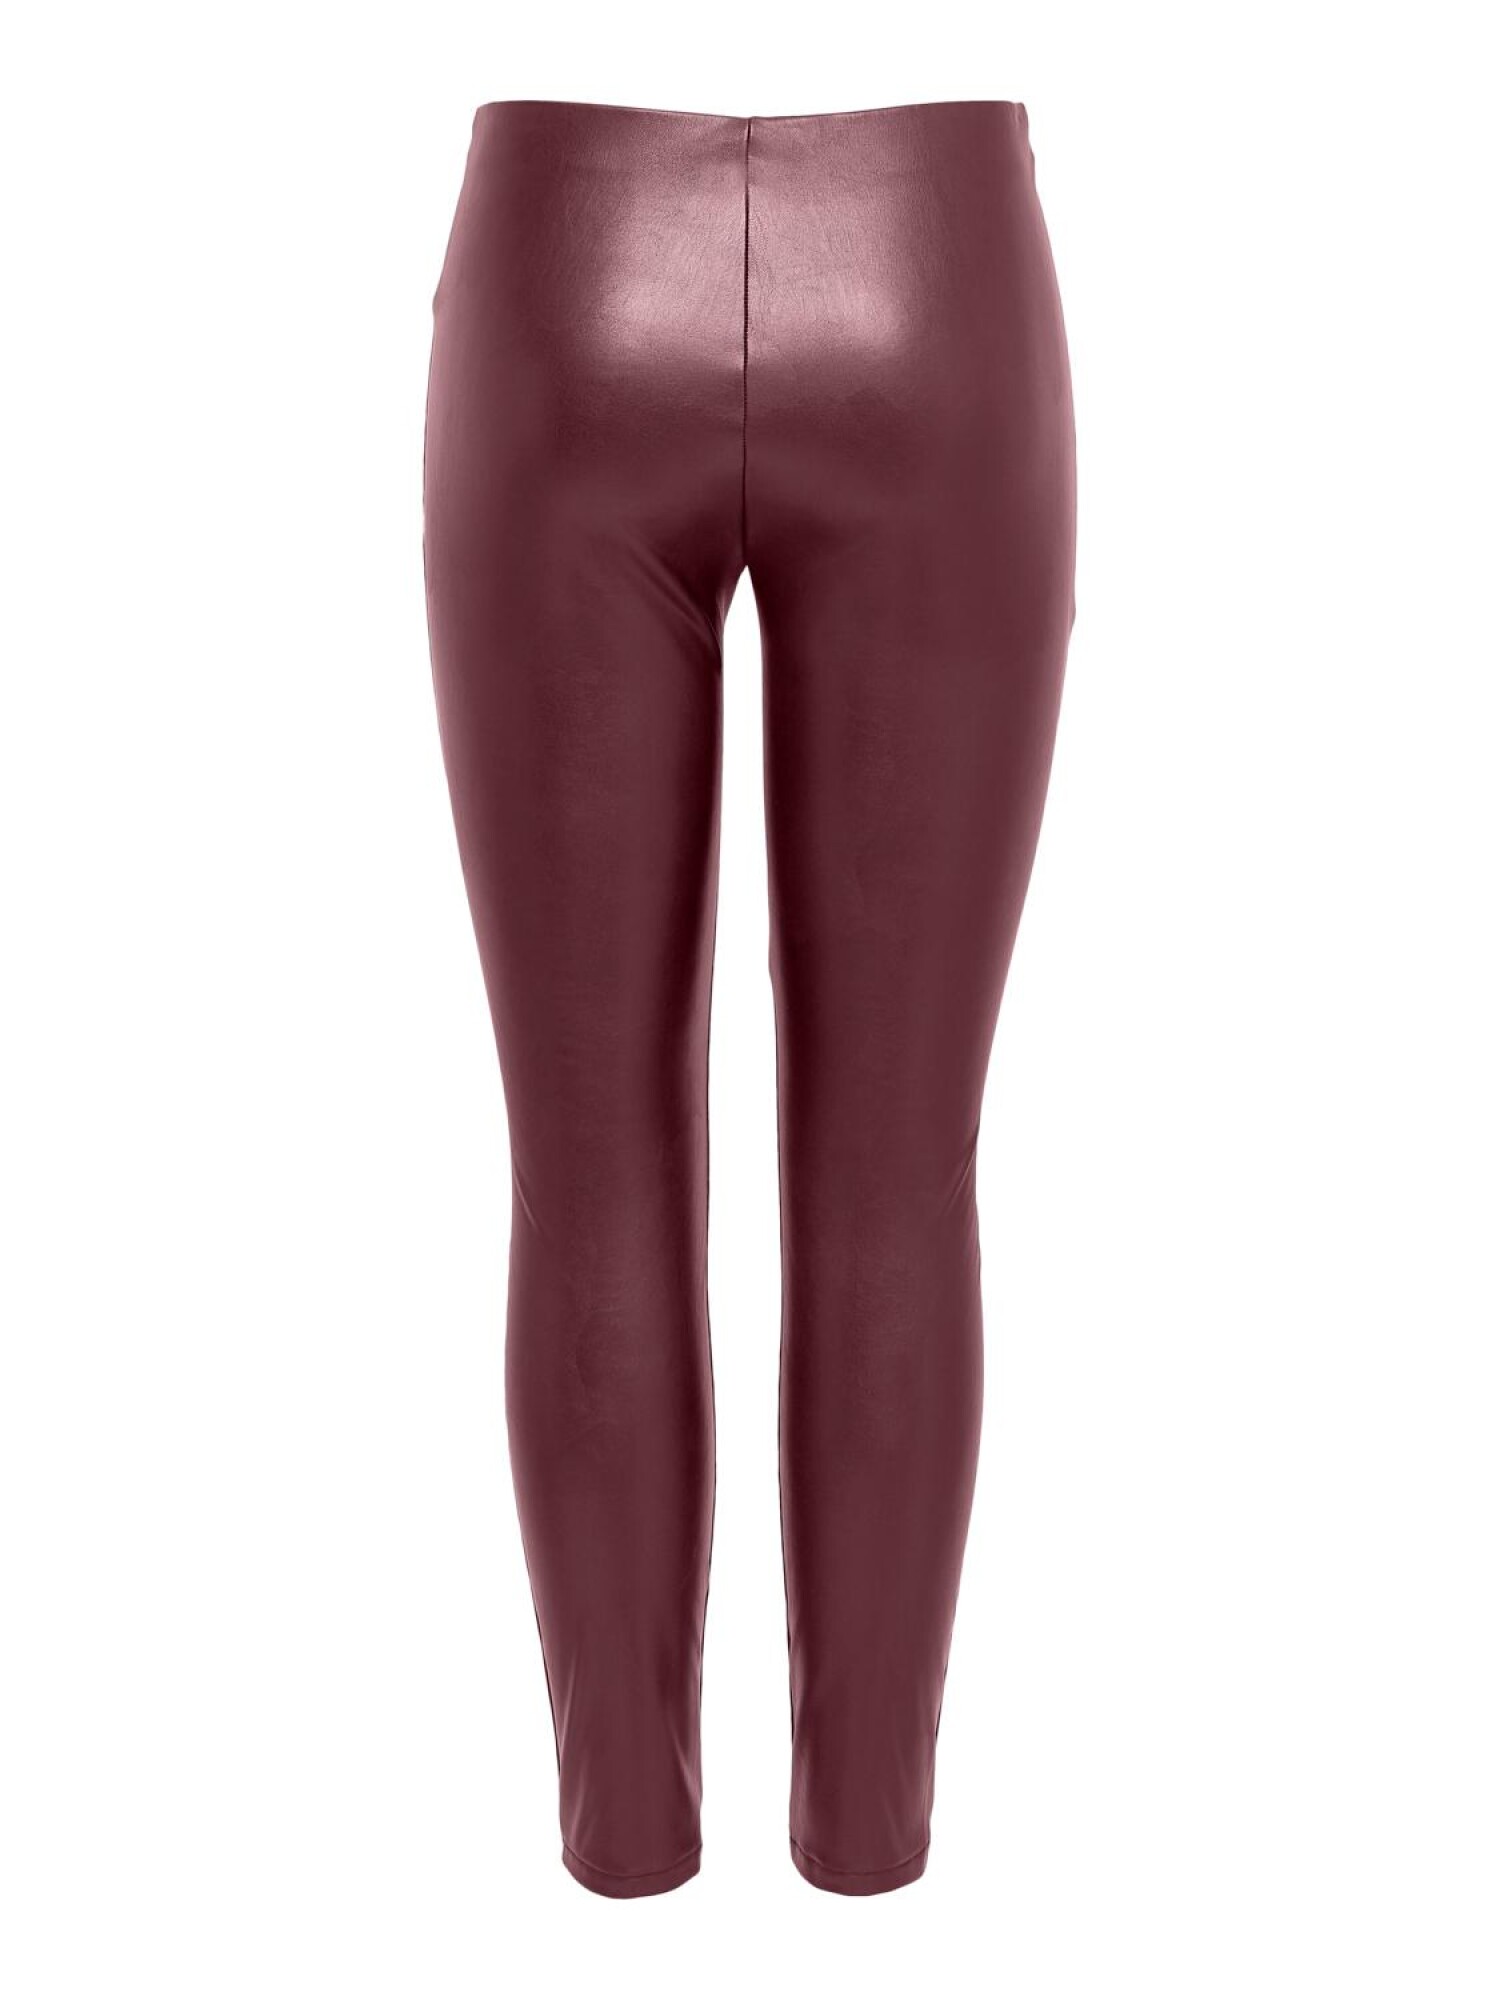 https://f.fcdn.app/imgs/0c1bb8/only.com.uy/onlyuy/f310/original/catalogo/15210614_3453830_2/2000-2000/pantalon-tipo-leggings-vigga-efecto-piel-tawny-port.jpg